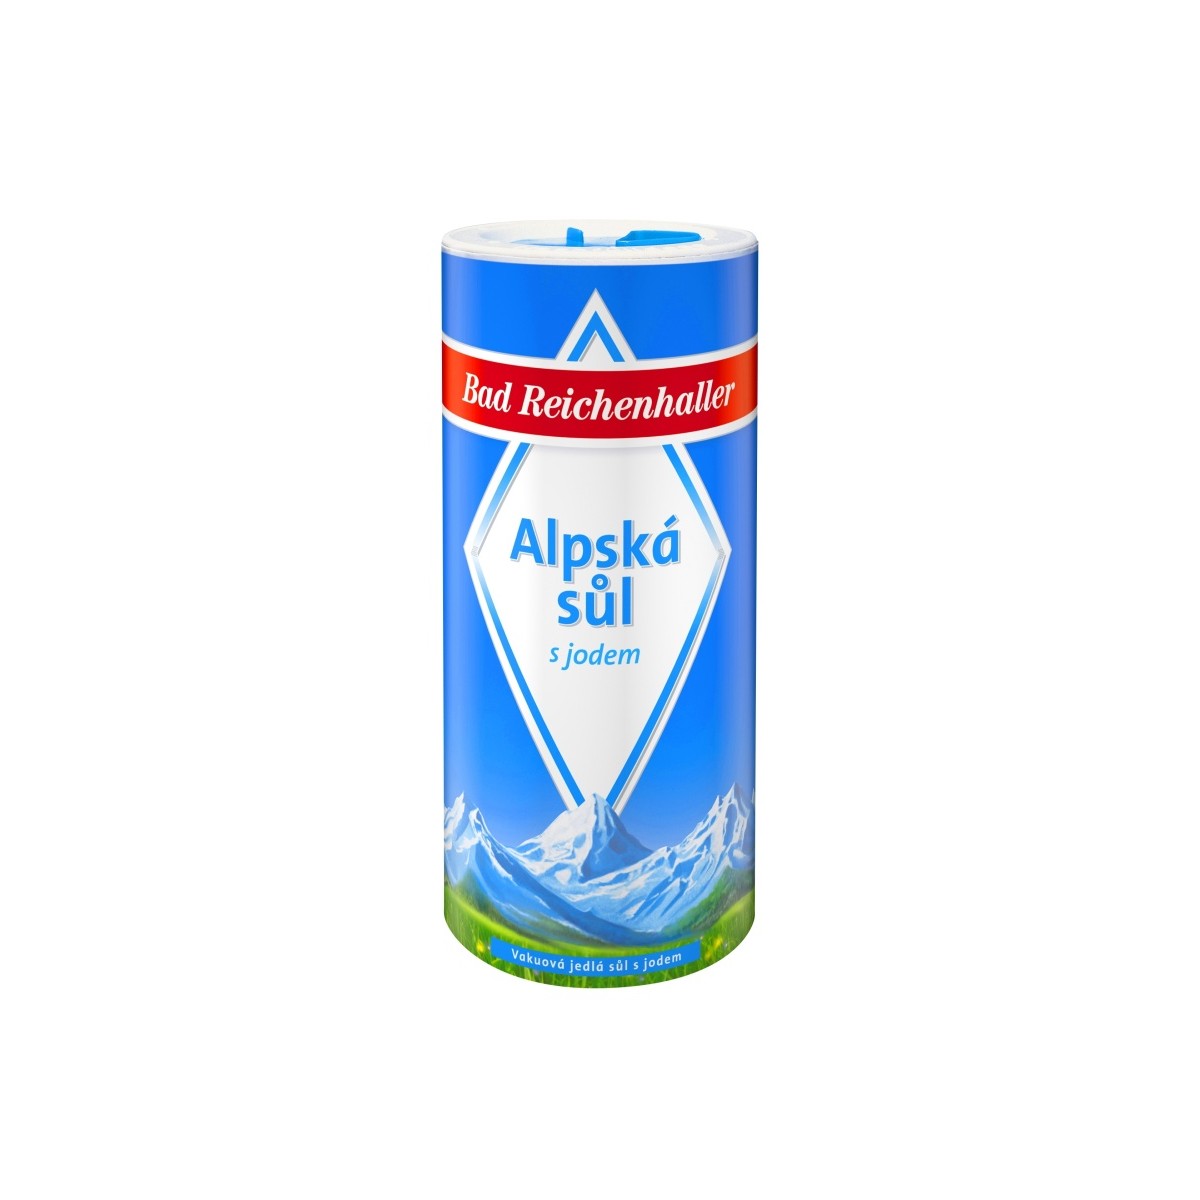 Sůl Alpská s jódem 500g - slánka